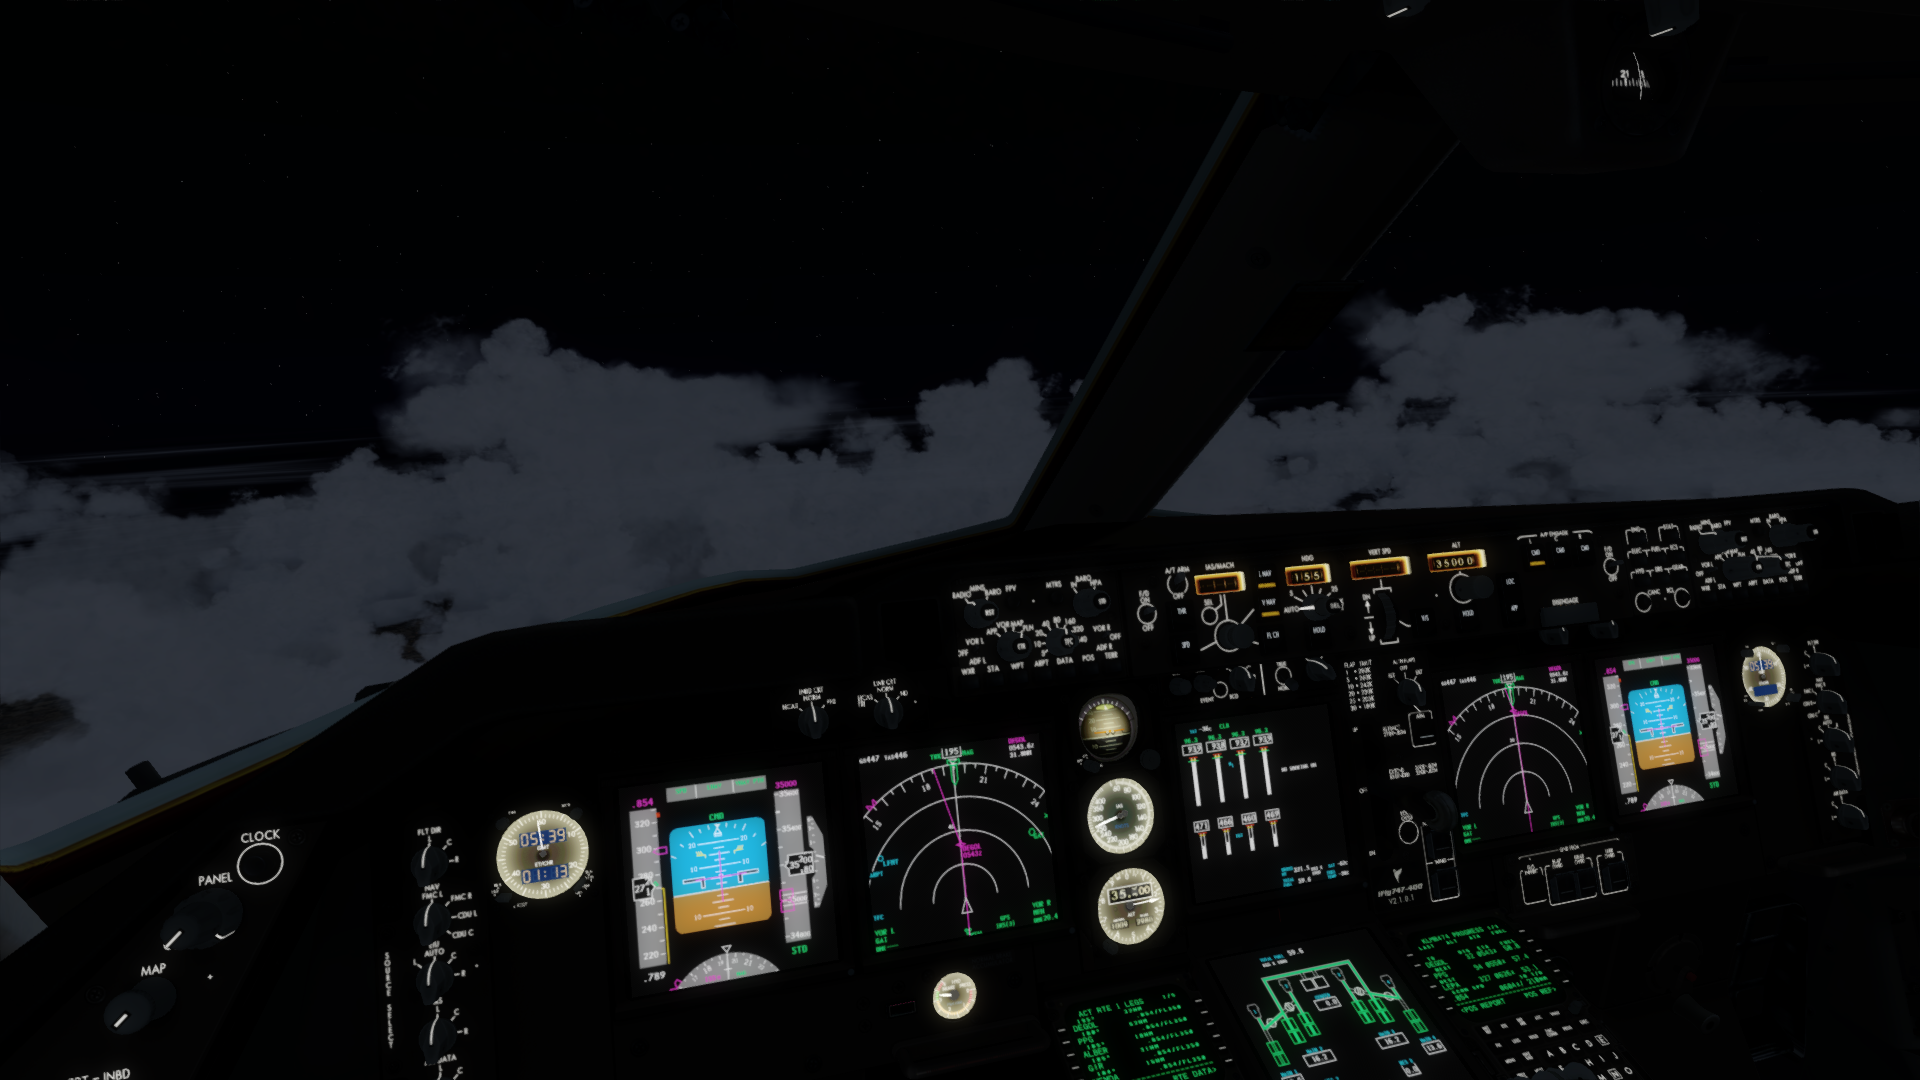 free download flight simulator x steam edition